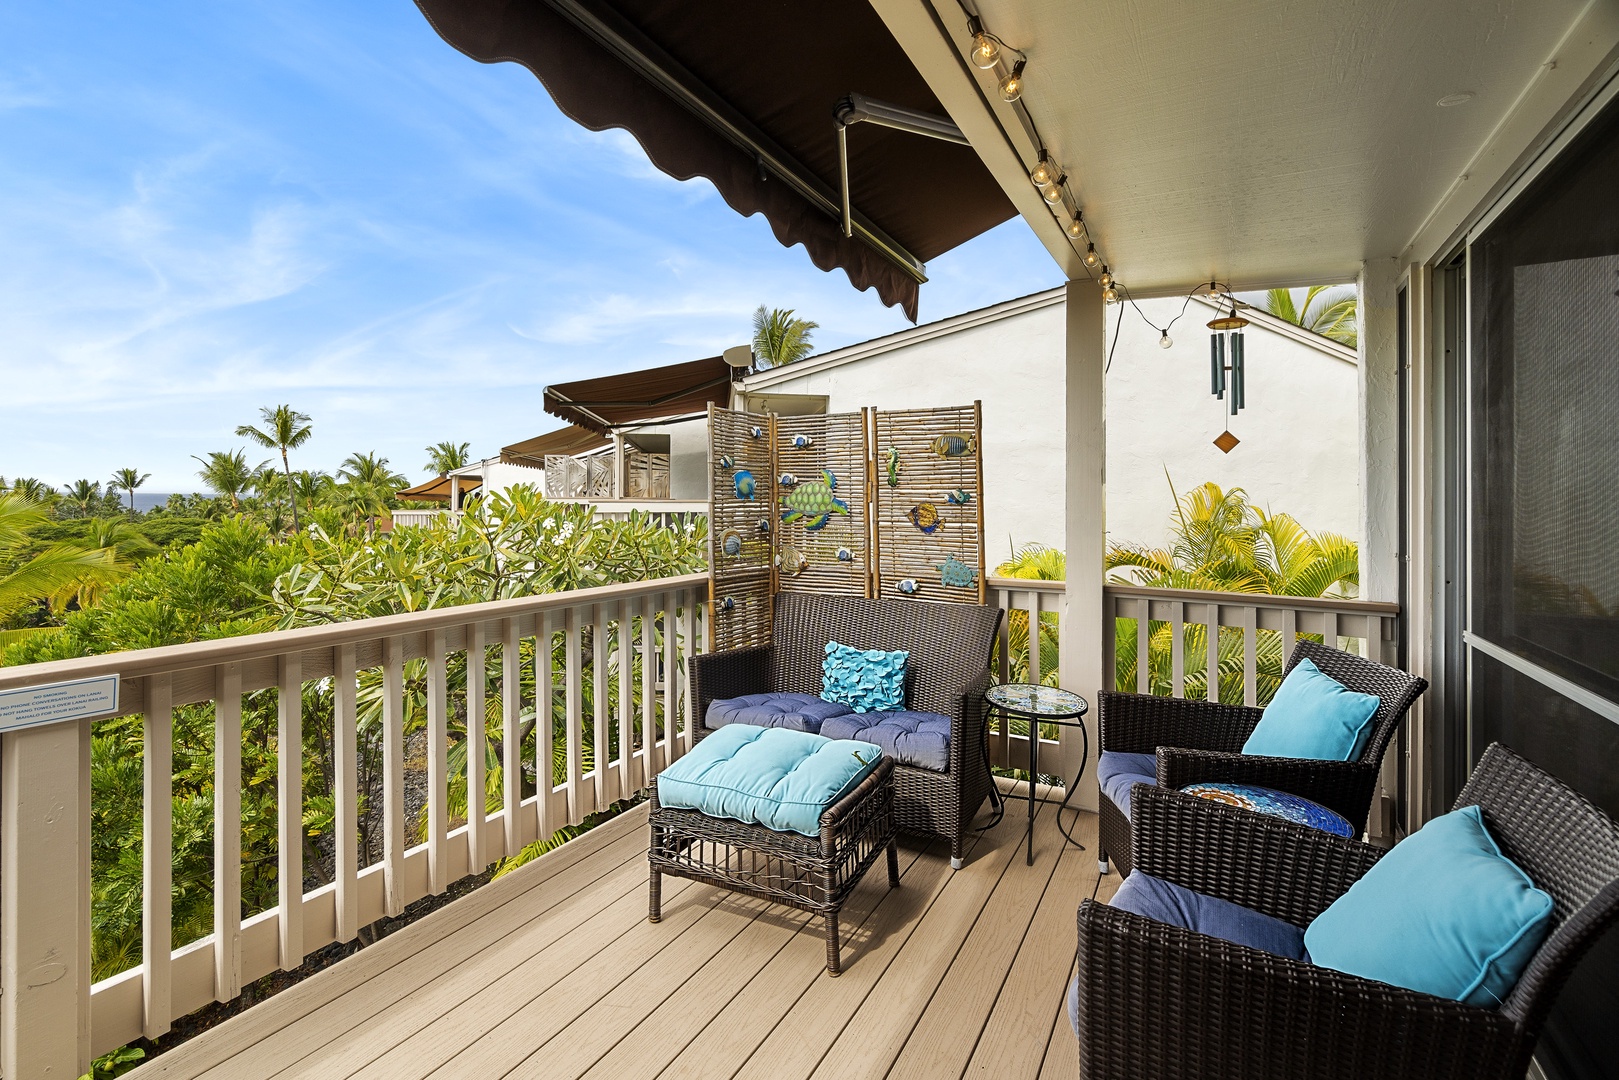 Kailua-Kona Vacation Rentals, Keauhou Resort 116 - Additional seating options on the Lanai